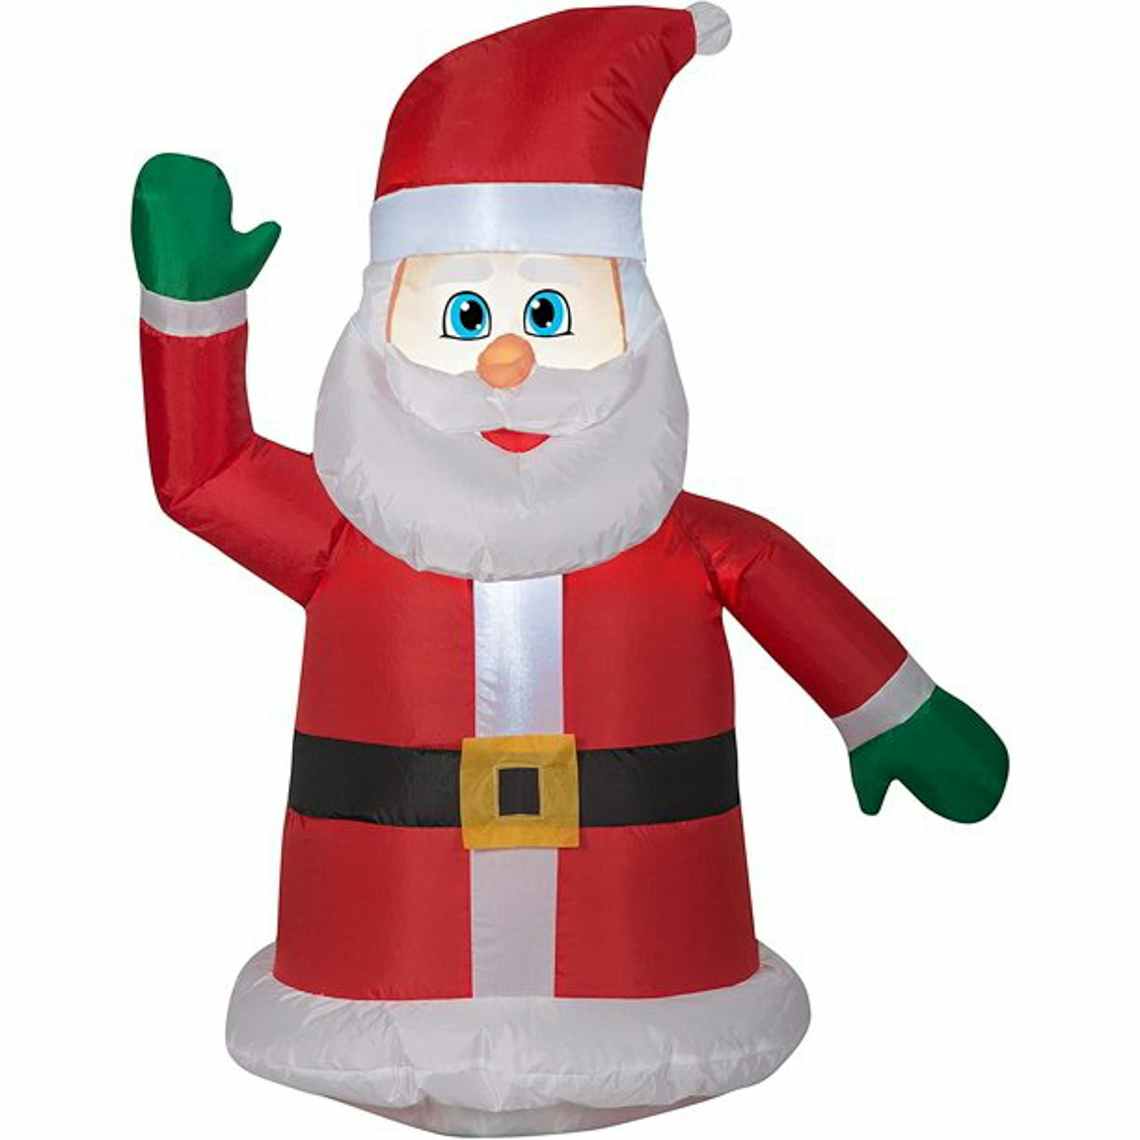 stock photo of car buddy santa inflatable on white background